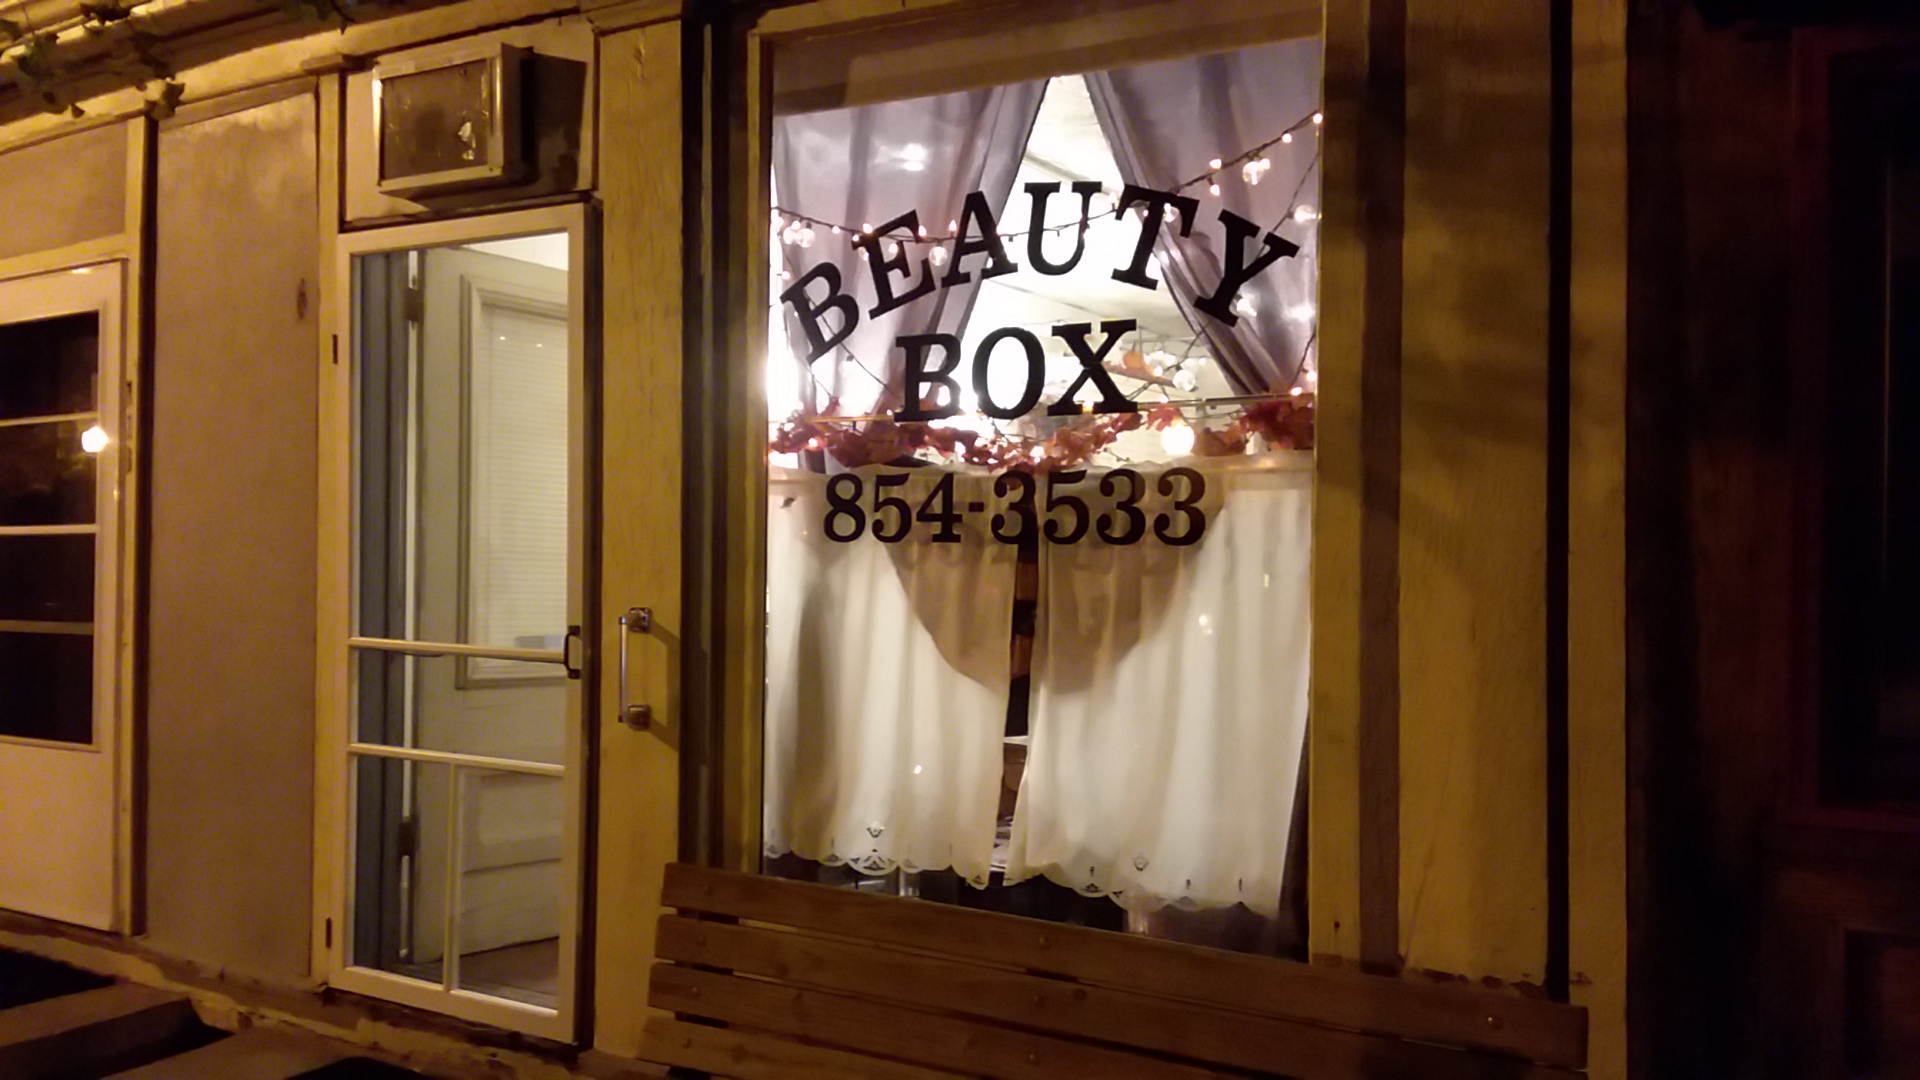 Beauty Box 112 Canal St N, Canal Fulton Ohio 44614